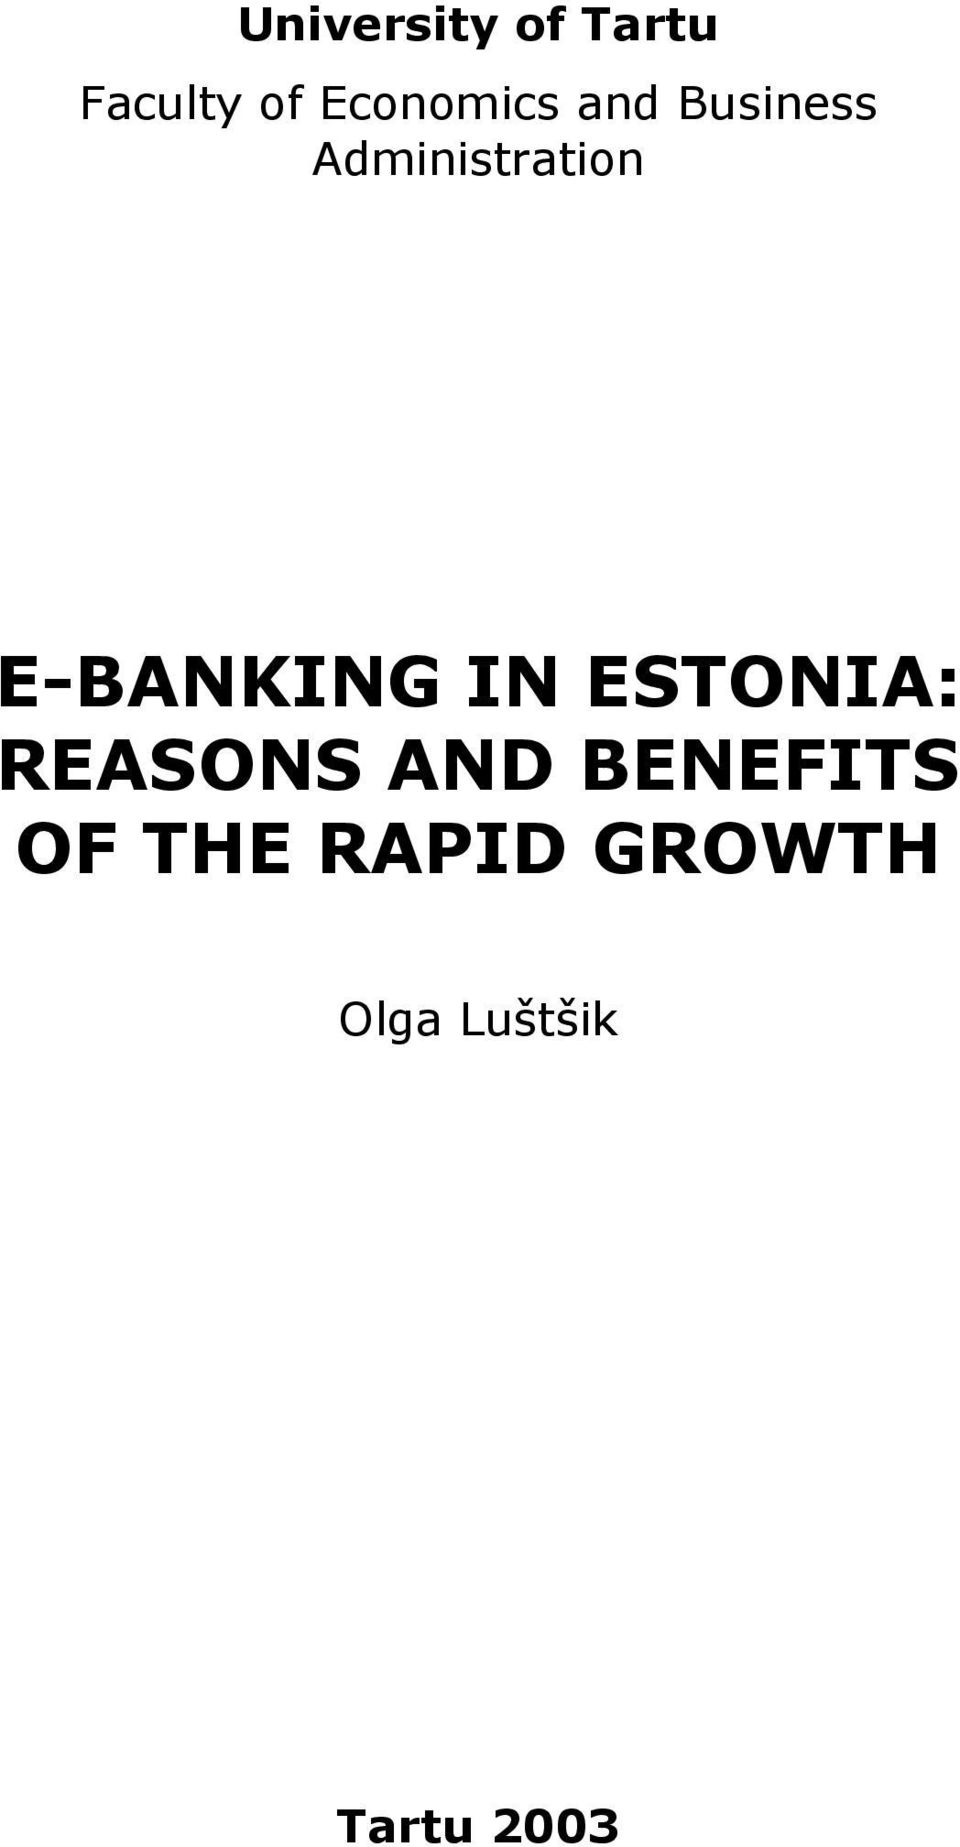 E-BANKING IN ESTONIA: REASONS AND